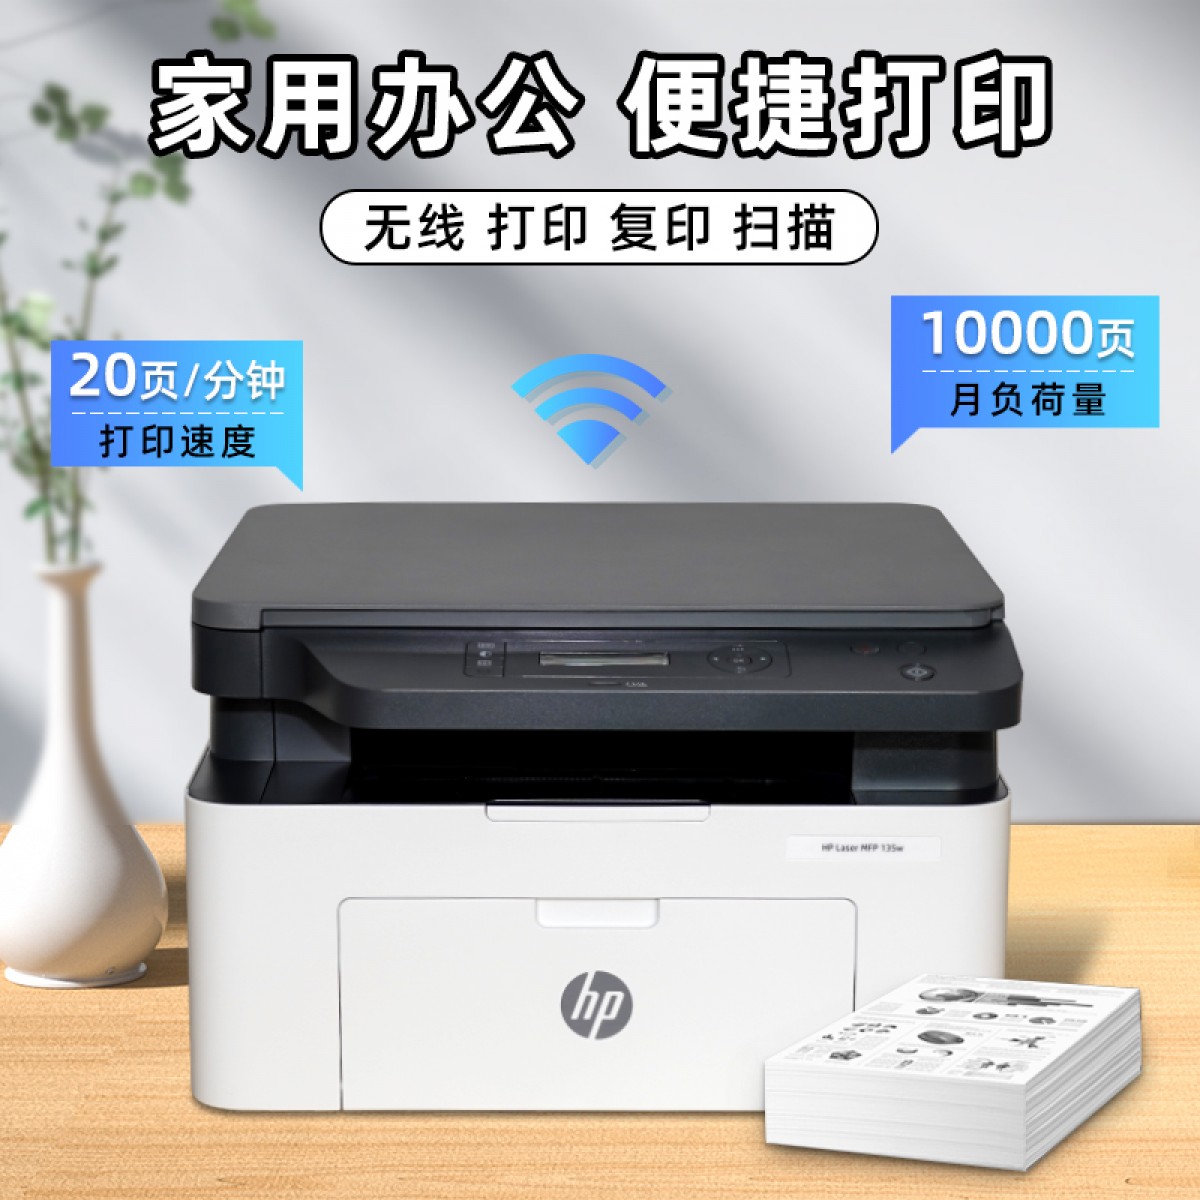 HP惠普M135W黑白激光打印机无线M136w复印扫描多功能一体机A4小型